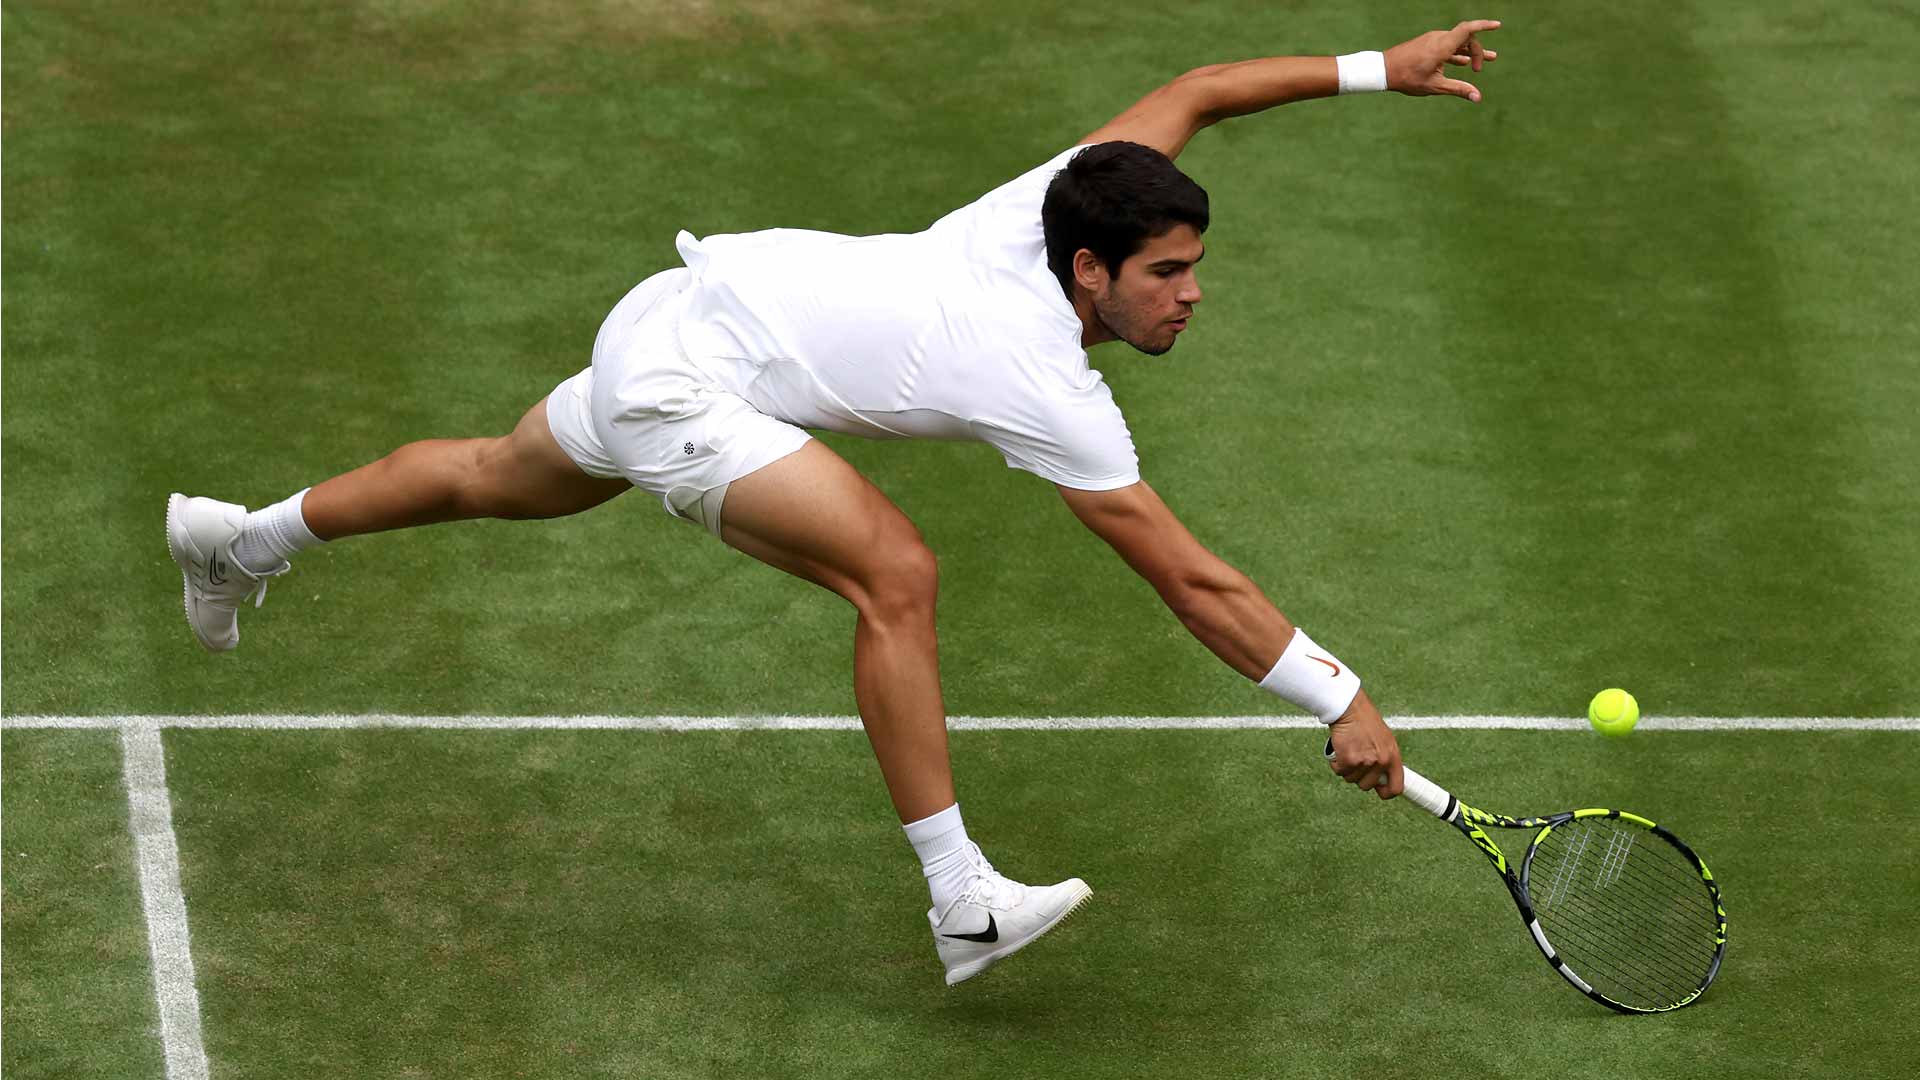 Carlos Alcaraz reaches his first Wimbledon quarter-final with a four-set win against Matteo Berrettini.